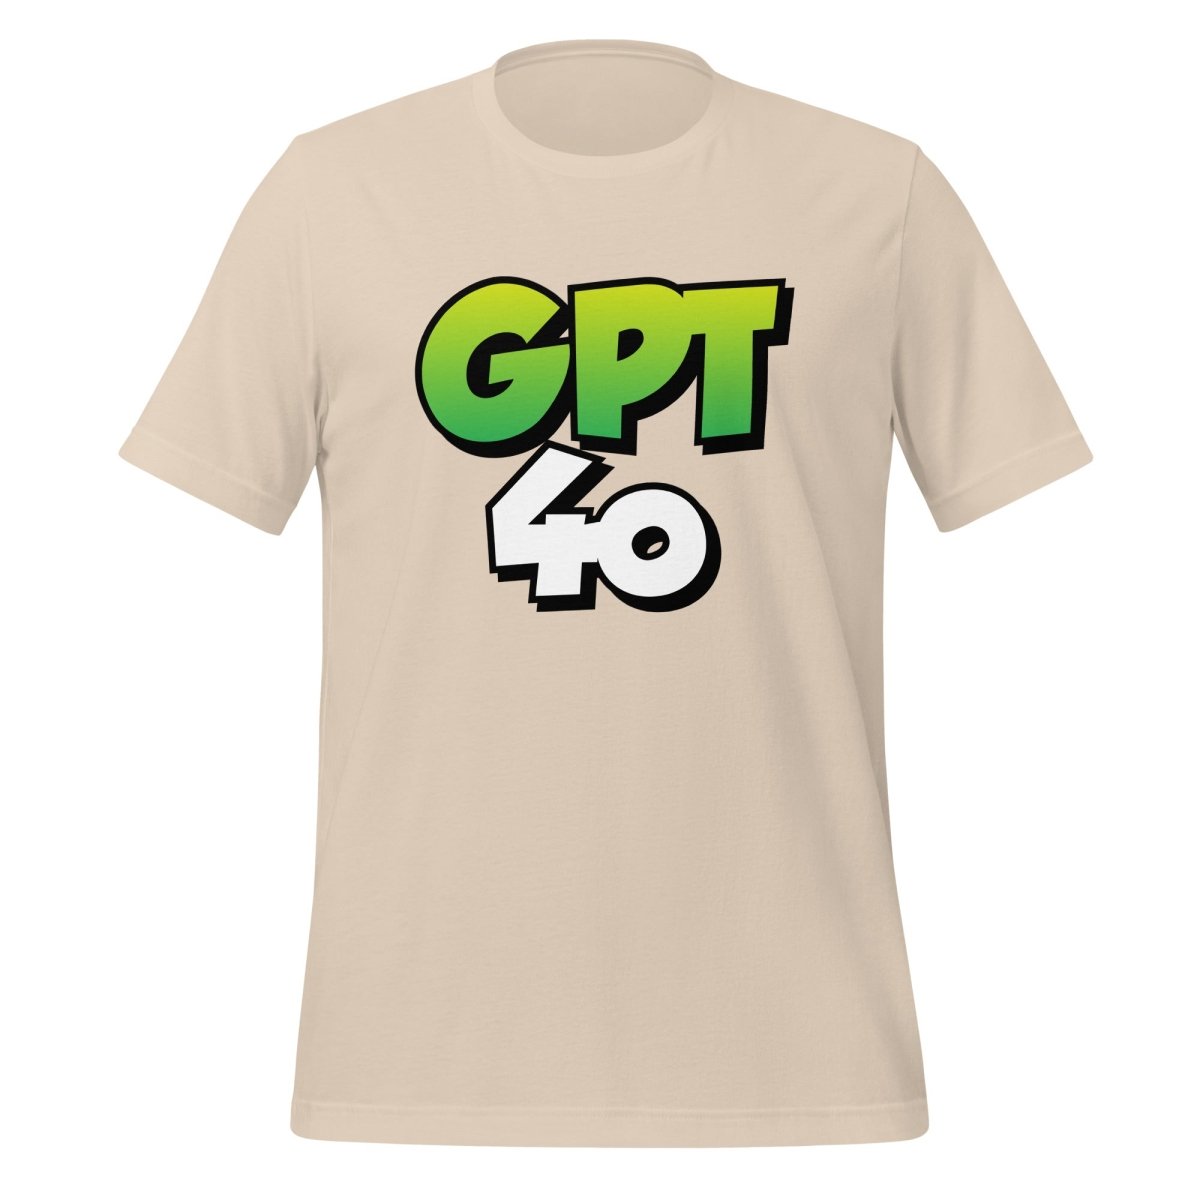 GPT 4o Ben 10 - Style T - Shirt (unisex) - Soft Cream - AI Store